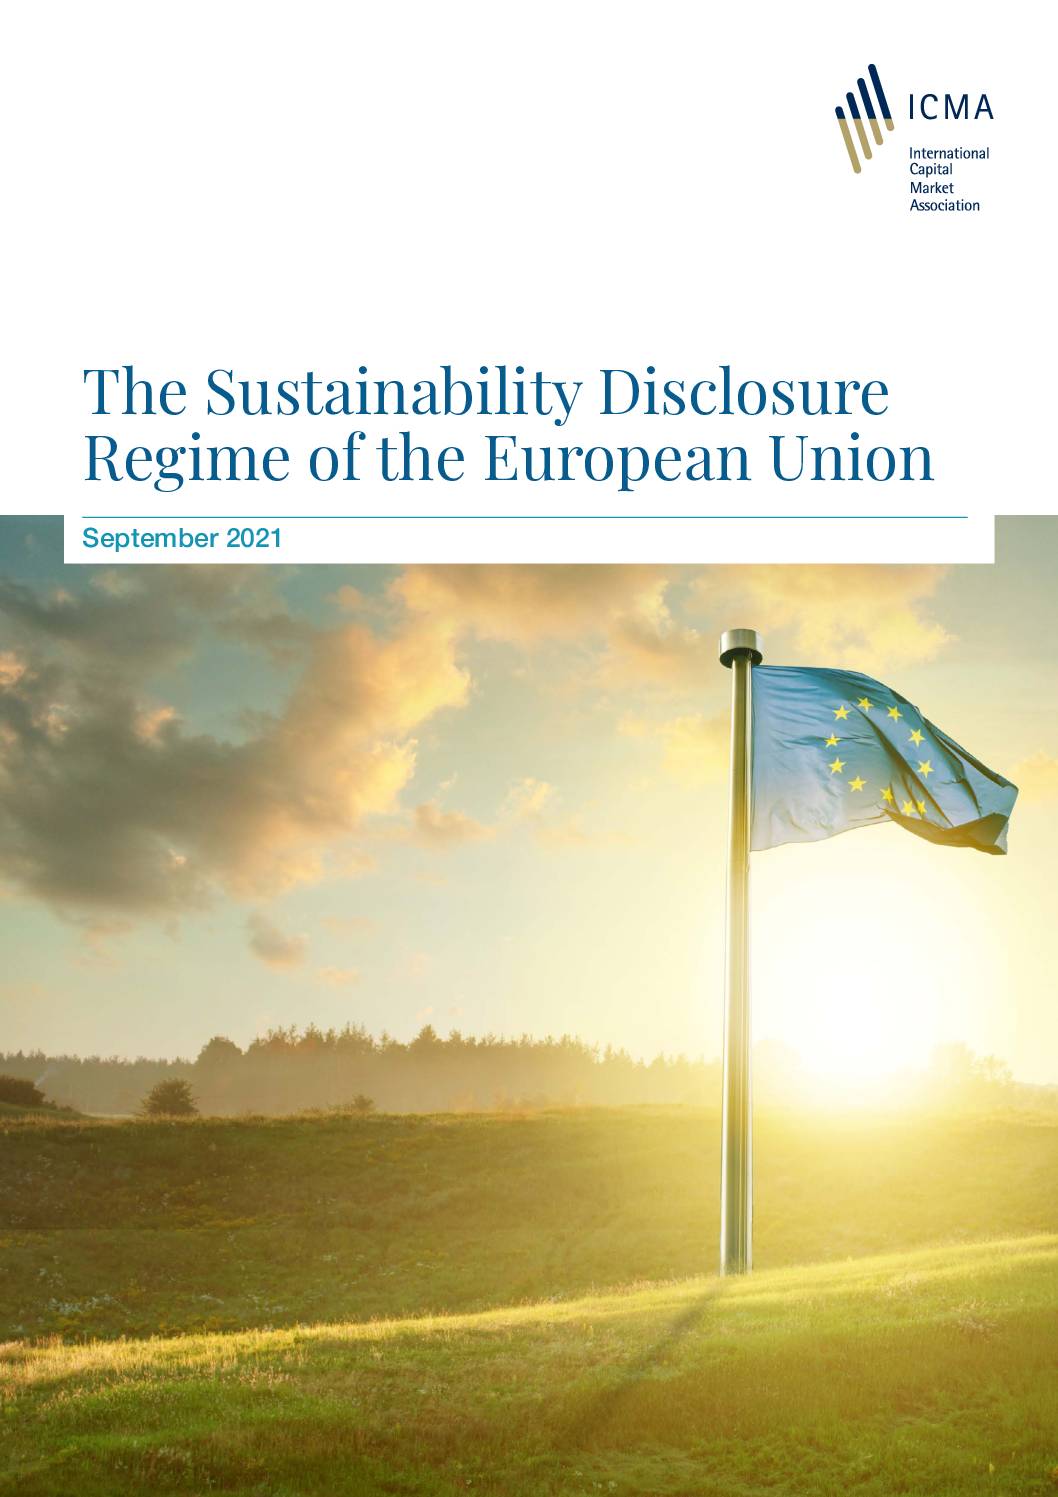 The Sustainability Disclosure Regime of the European Union